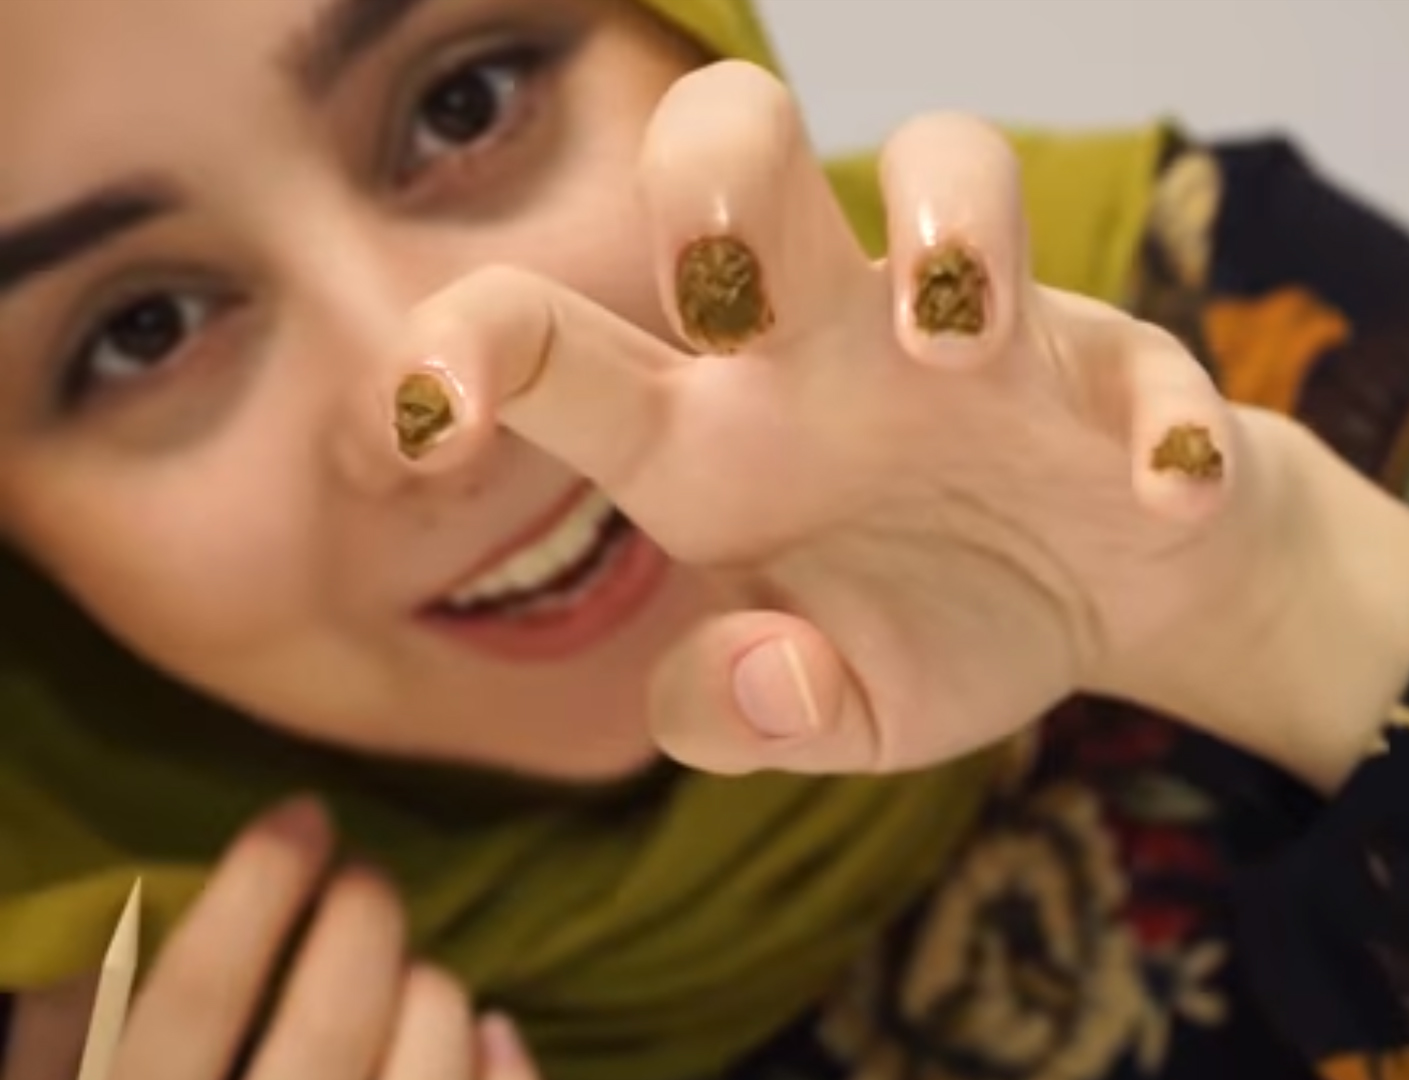 Ногти халяль. Хна для ногтей для мусульманок. Красить ногти хной. Ногти накрашенные хной. Мусульманские ногти.